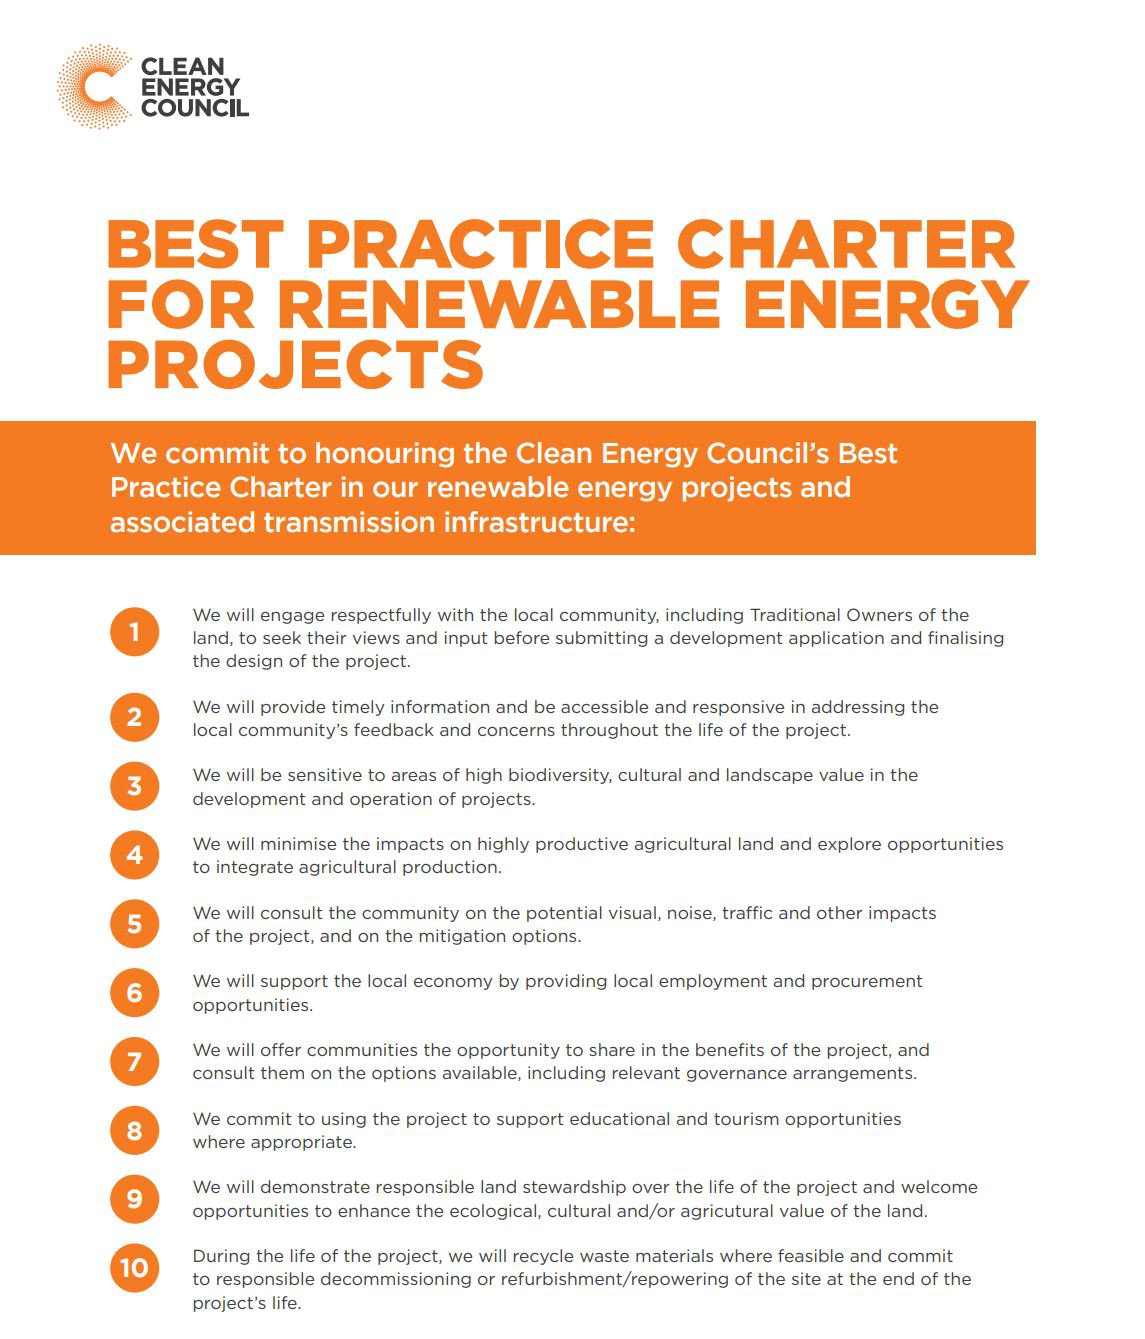 Clean Energy Council's Best Practice Charter